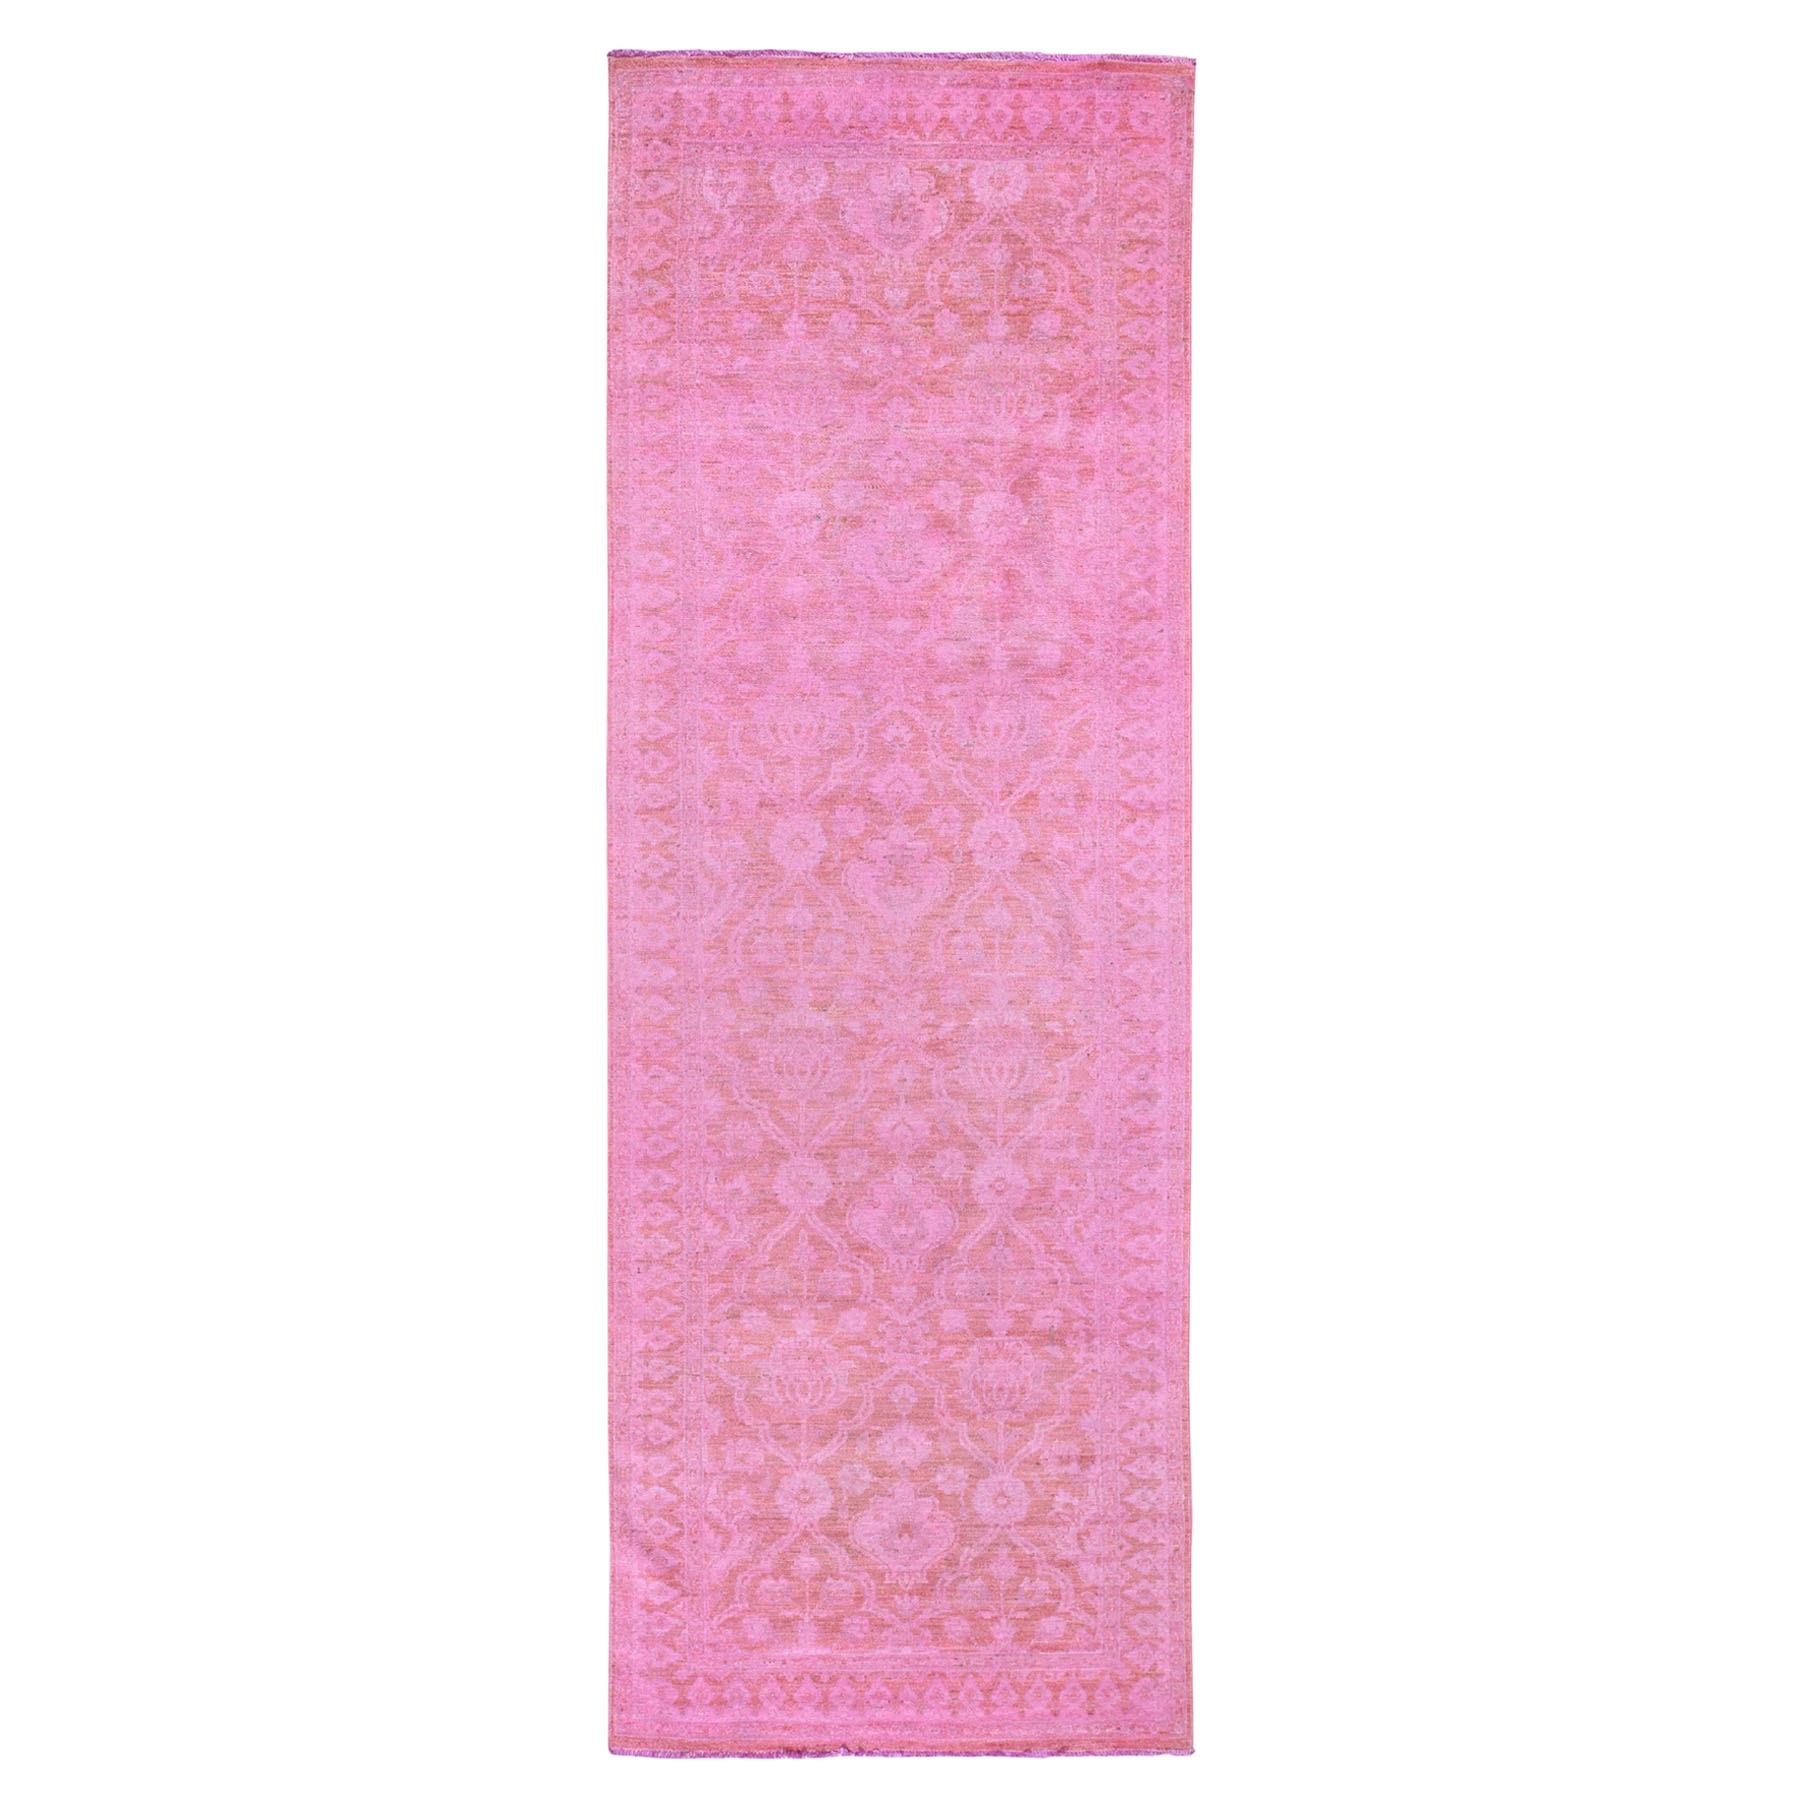 4'x12'2" Wide Runner Pink Overdyed Peshawar Hand Woven Oriental Rug 